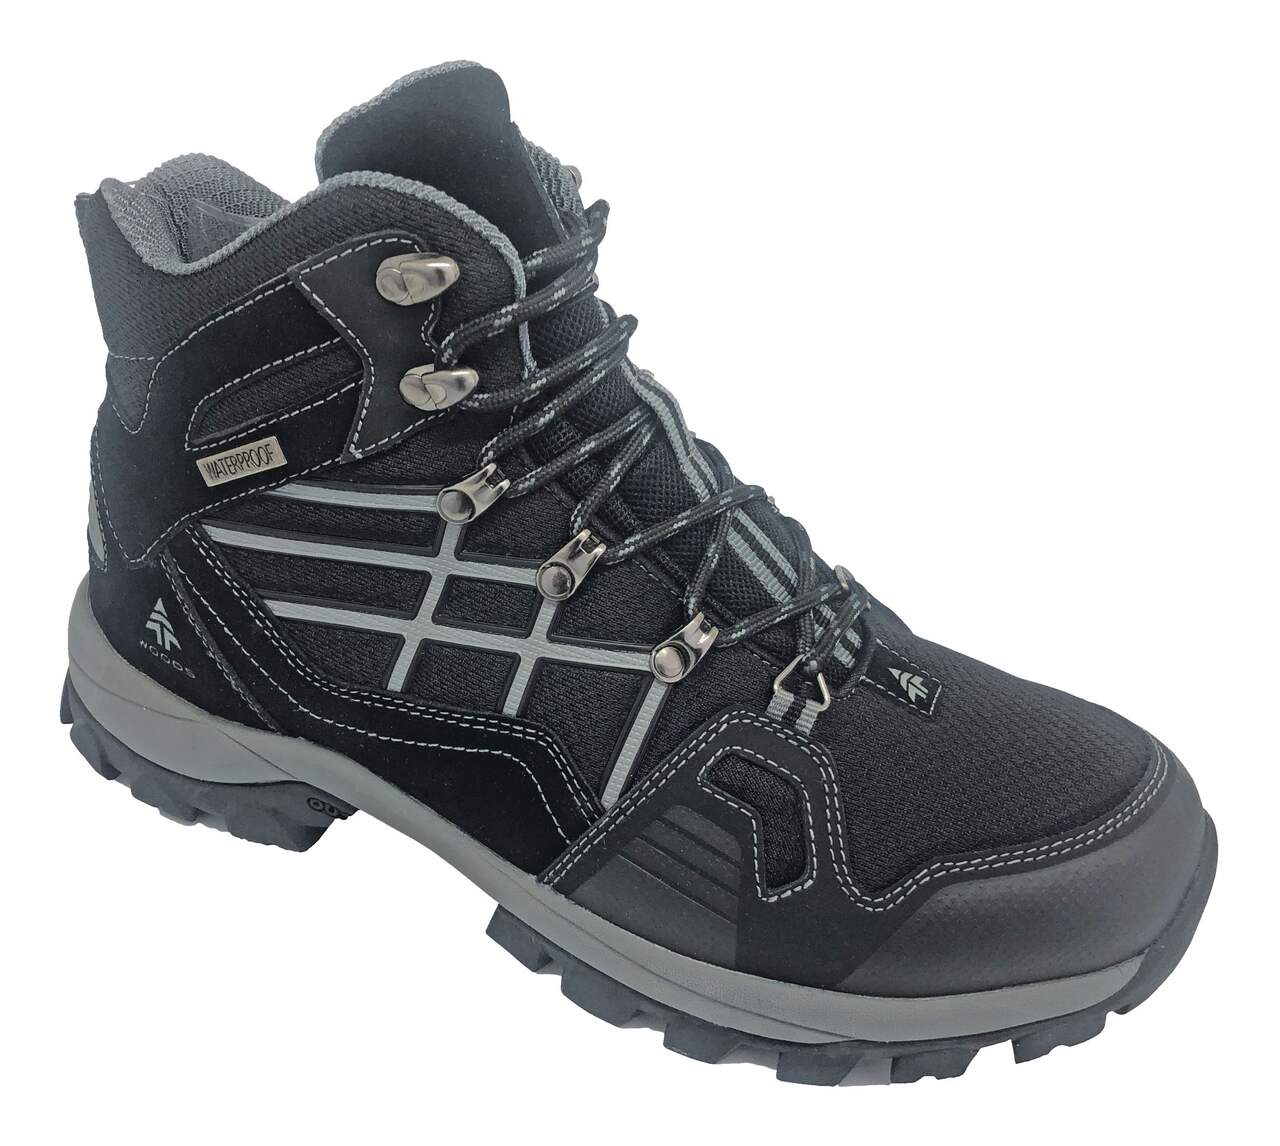 Woods™ Men's Mid-Cut Lightweight Waterproof Hiking Boots, Black/Grey